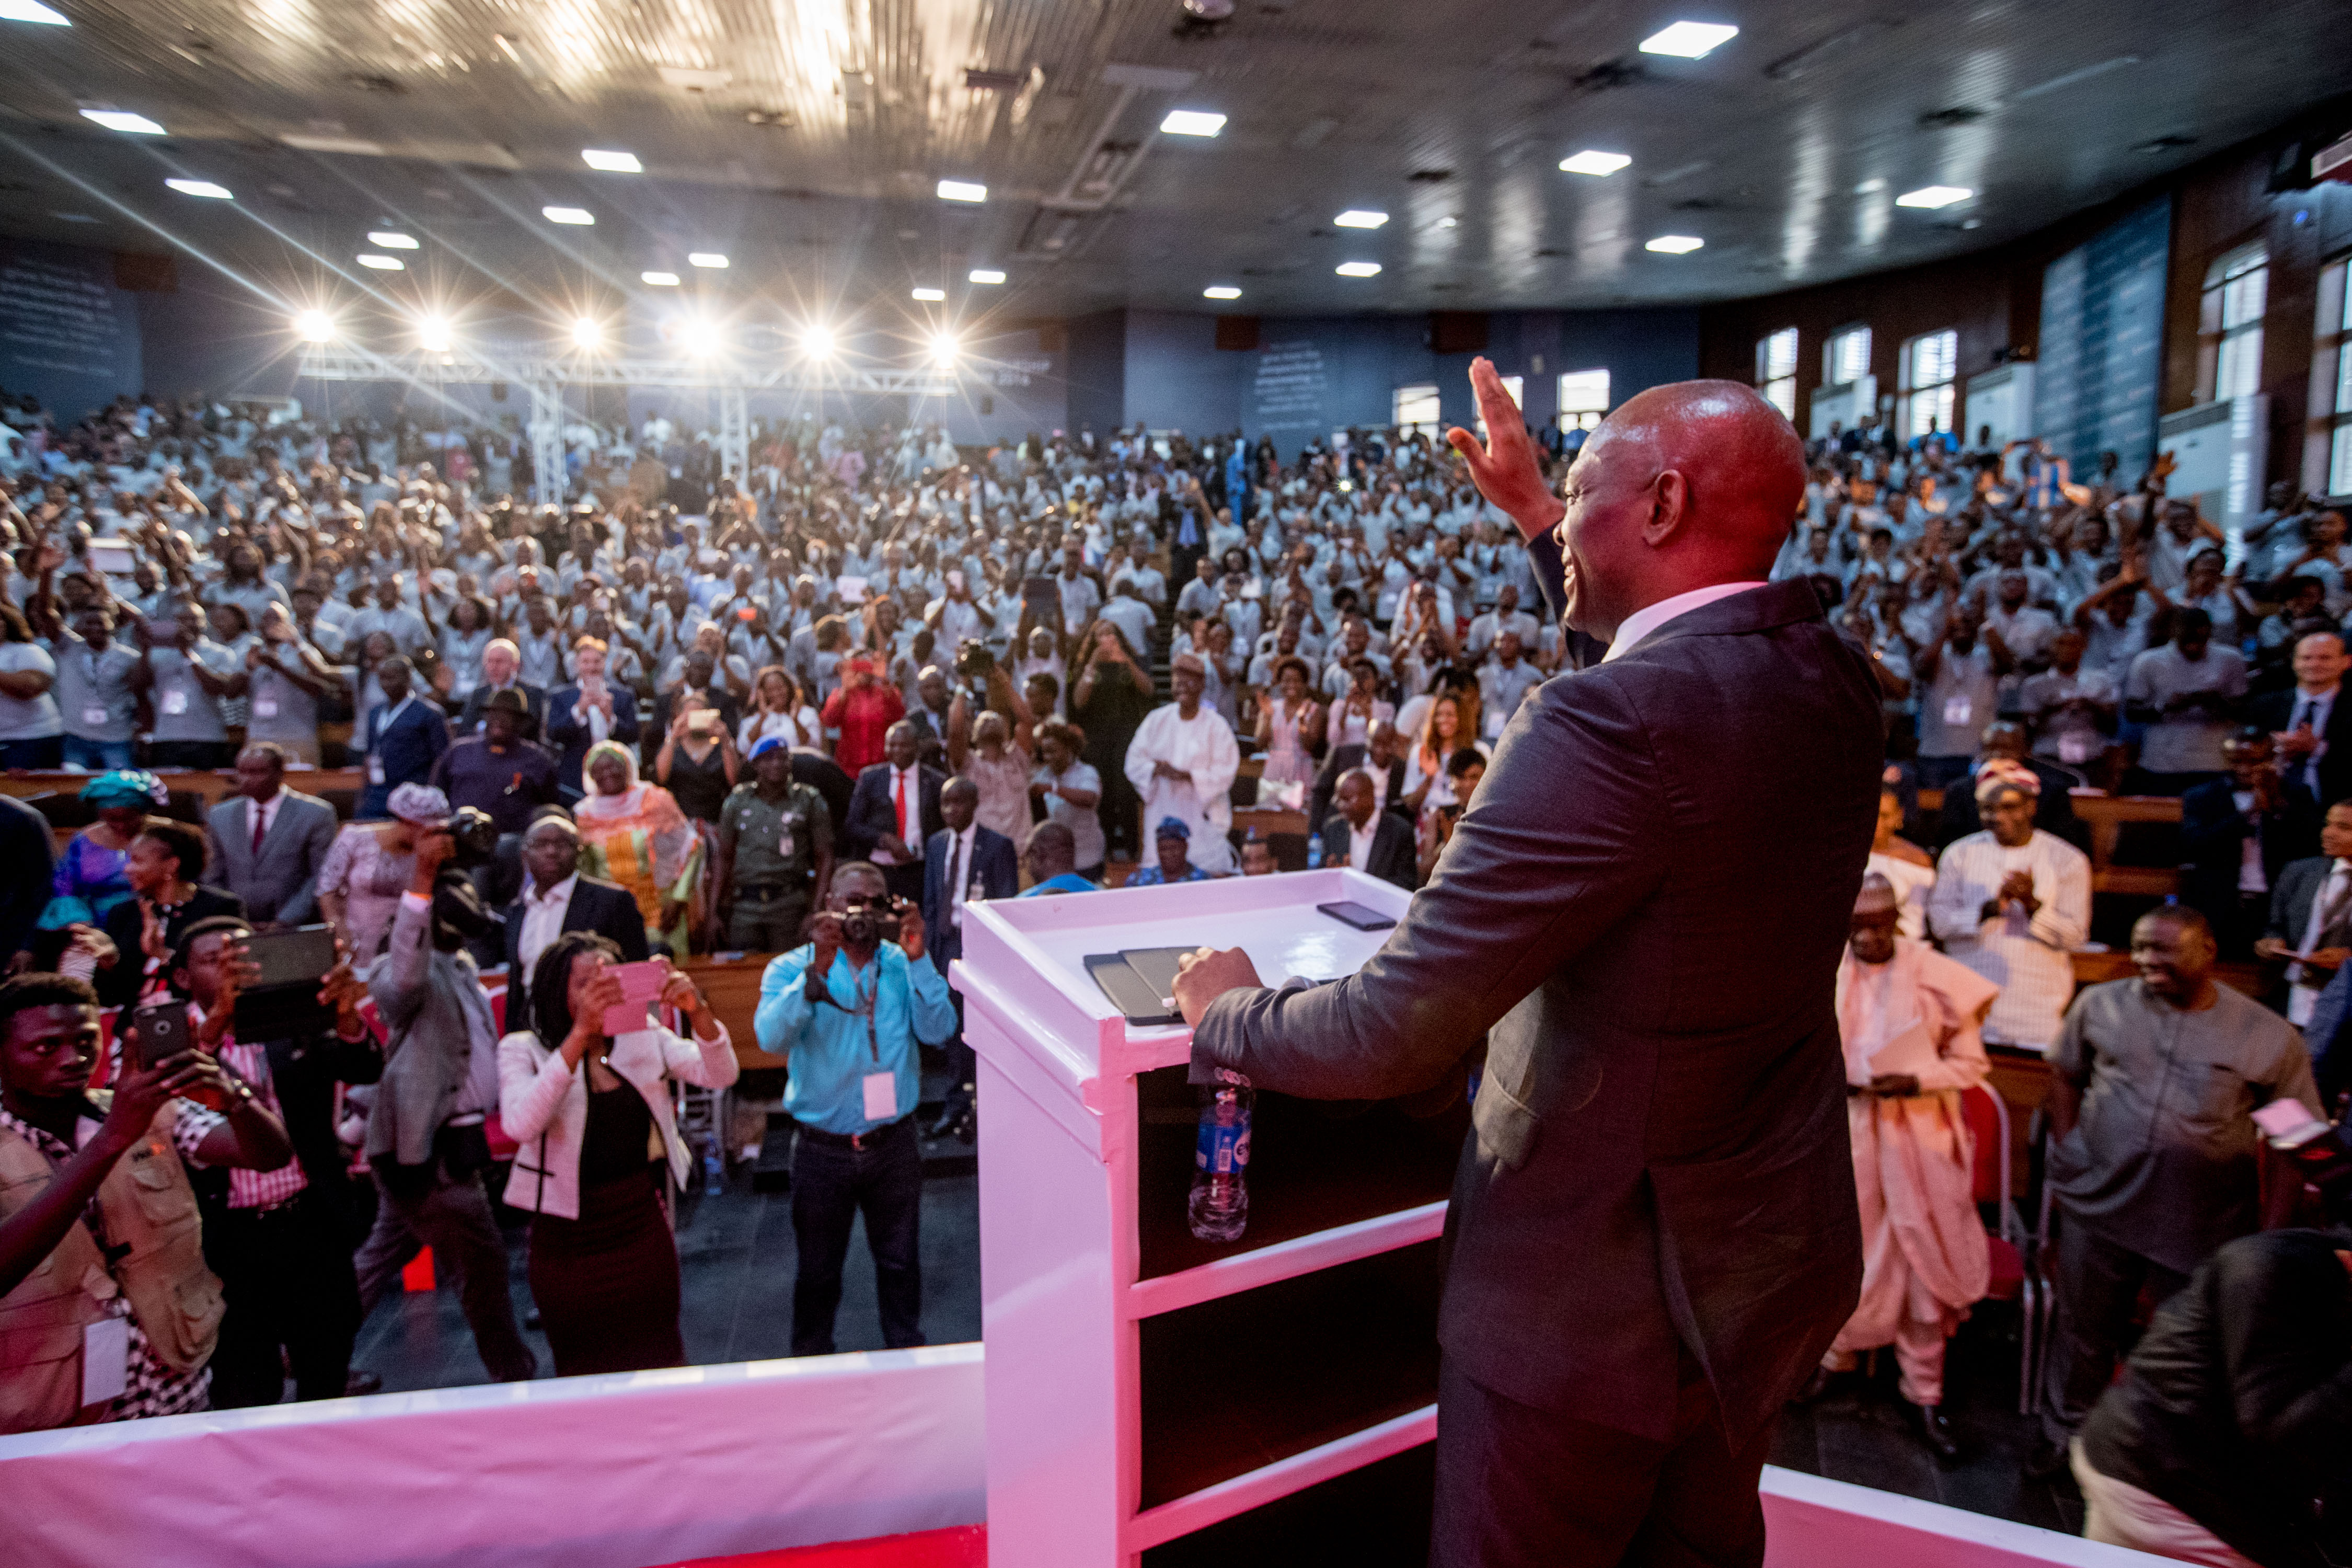 Tony O. Elumelu addressing the Tony Elumelu Entrepreneurs at the Tony Elumelu Foundation Entrepreneurship Forum 2016, which held in Lagos, Nigeria in October.